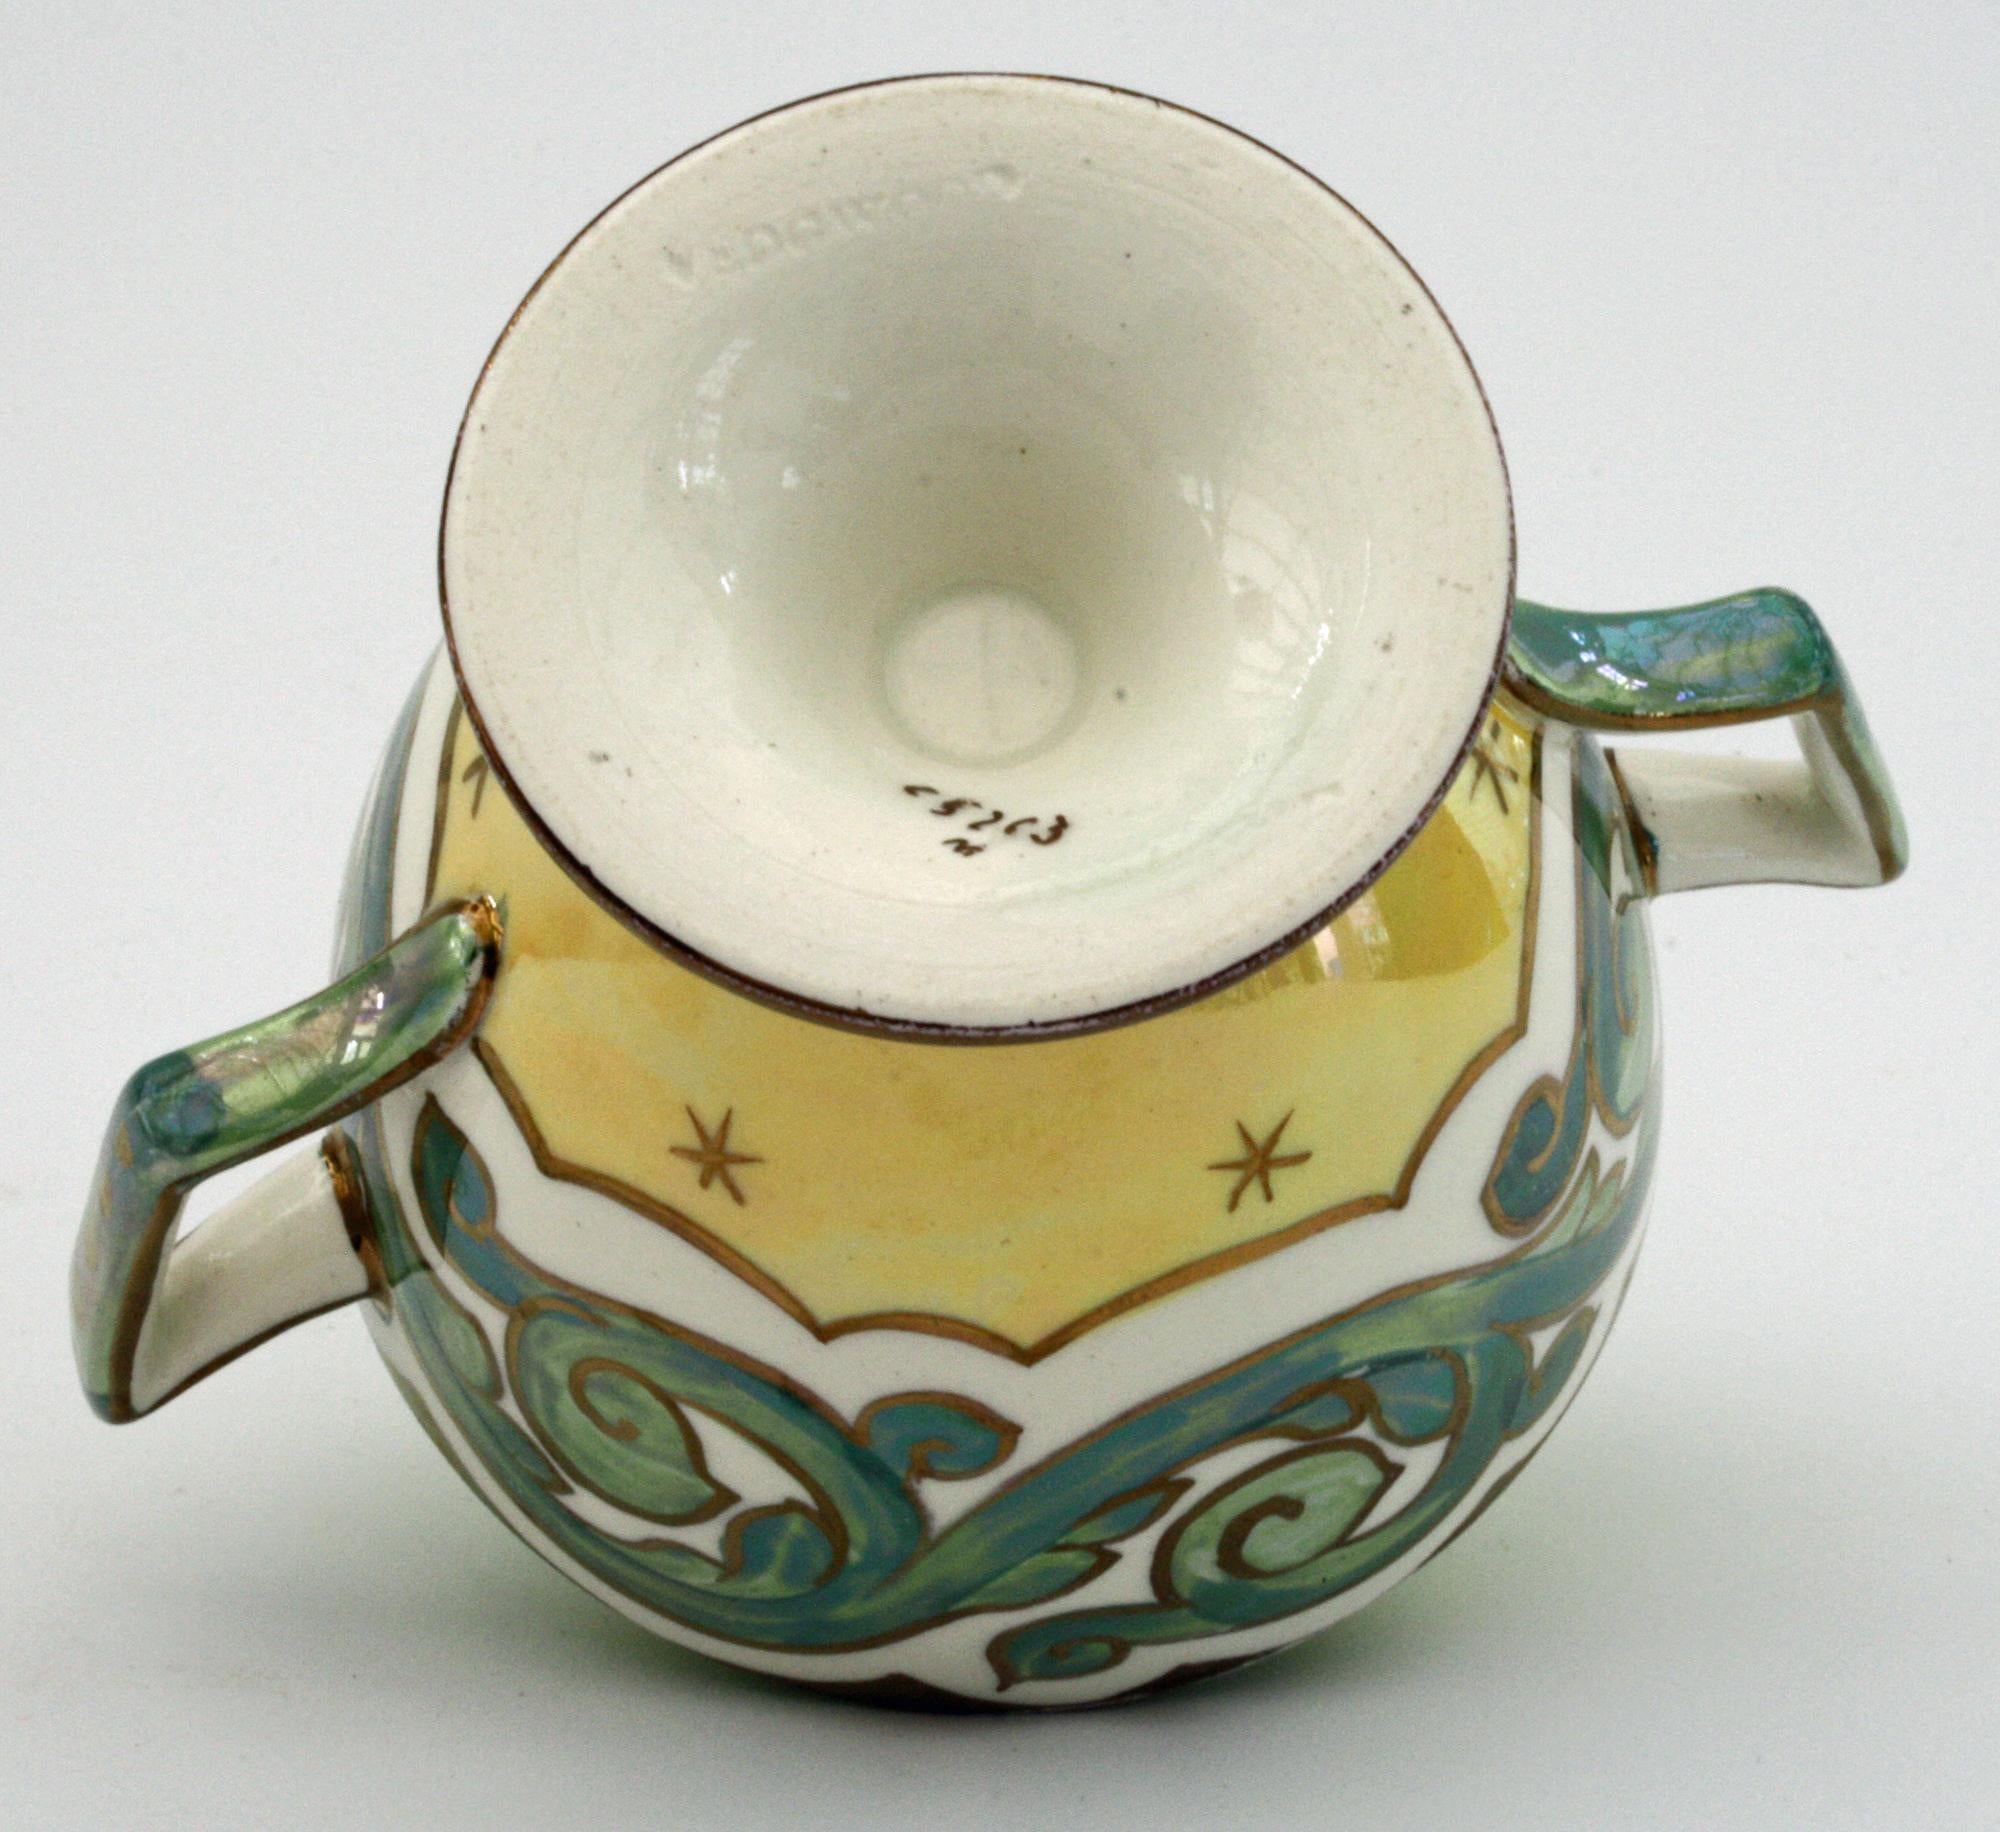 Ceramic Wedgwood Art Nouveau Twin Handled Lustre Glazed Pedestal Cup, circa 1900